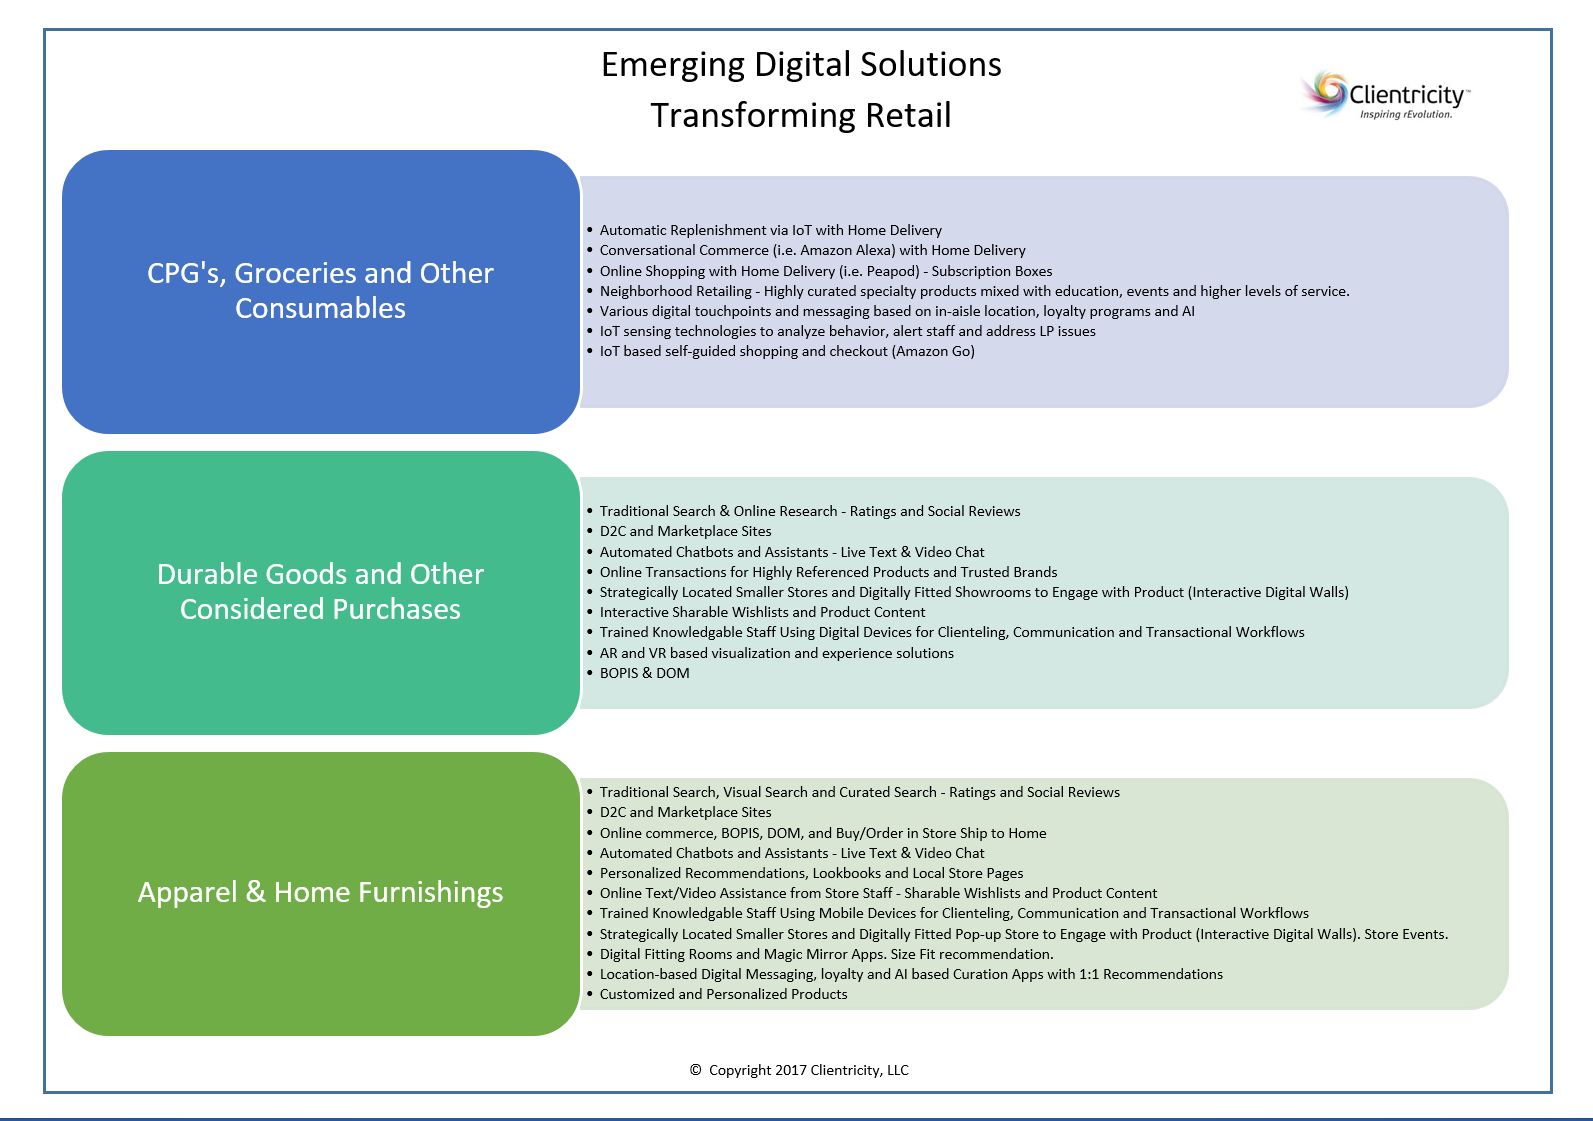 Emerging Digital Solutions Image